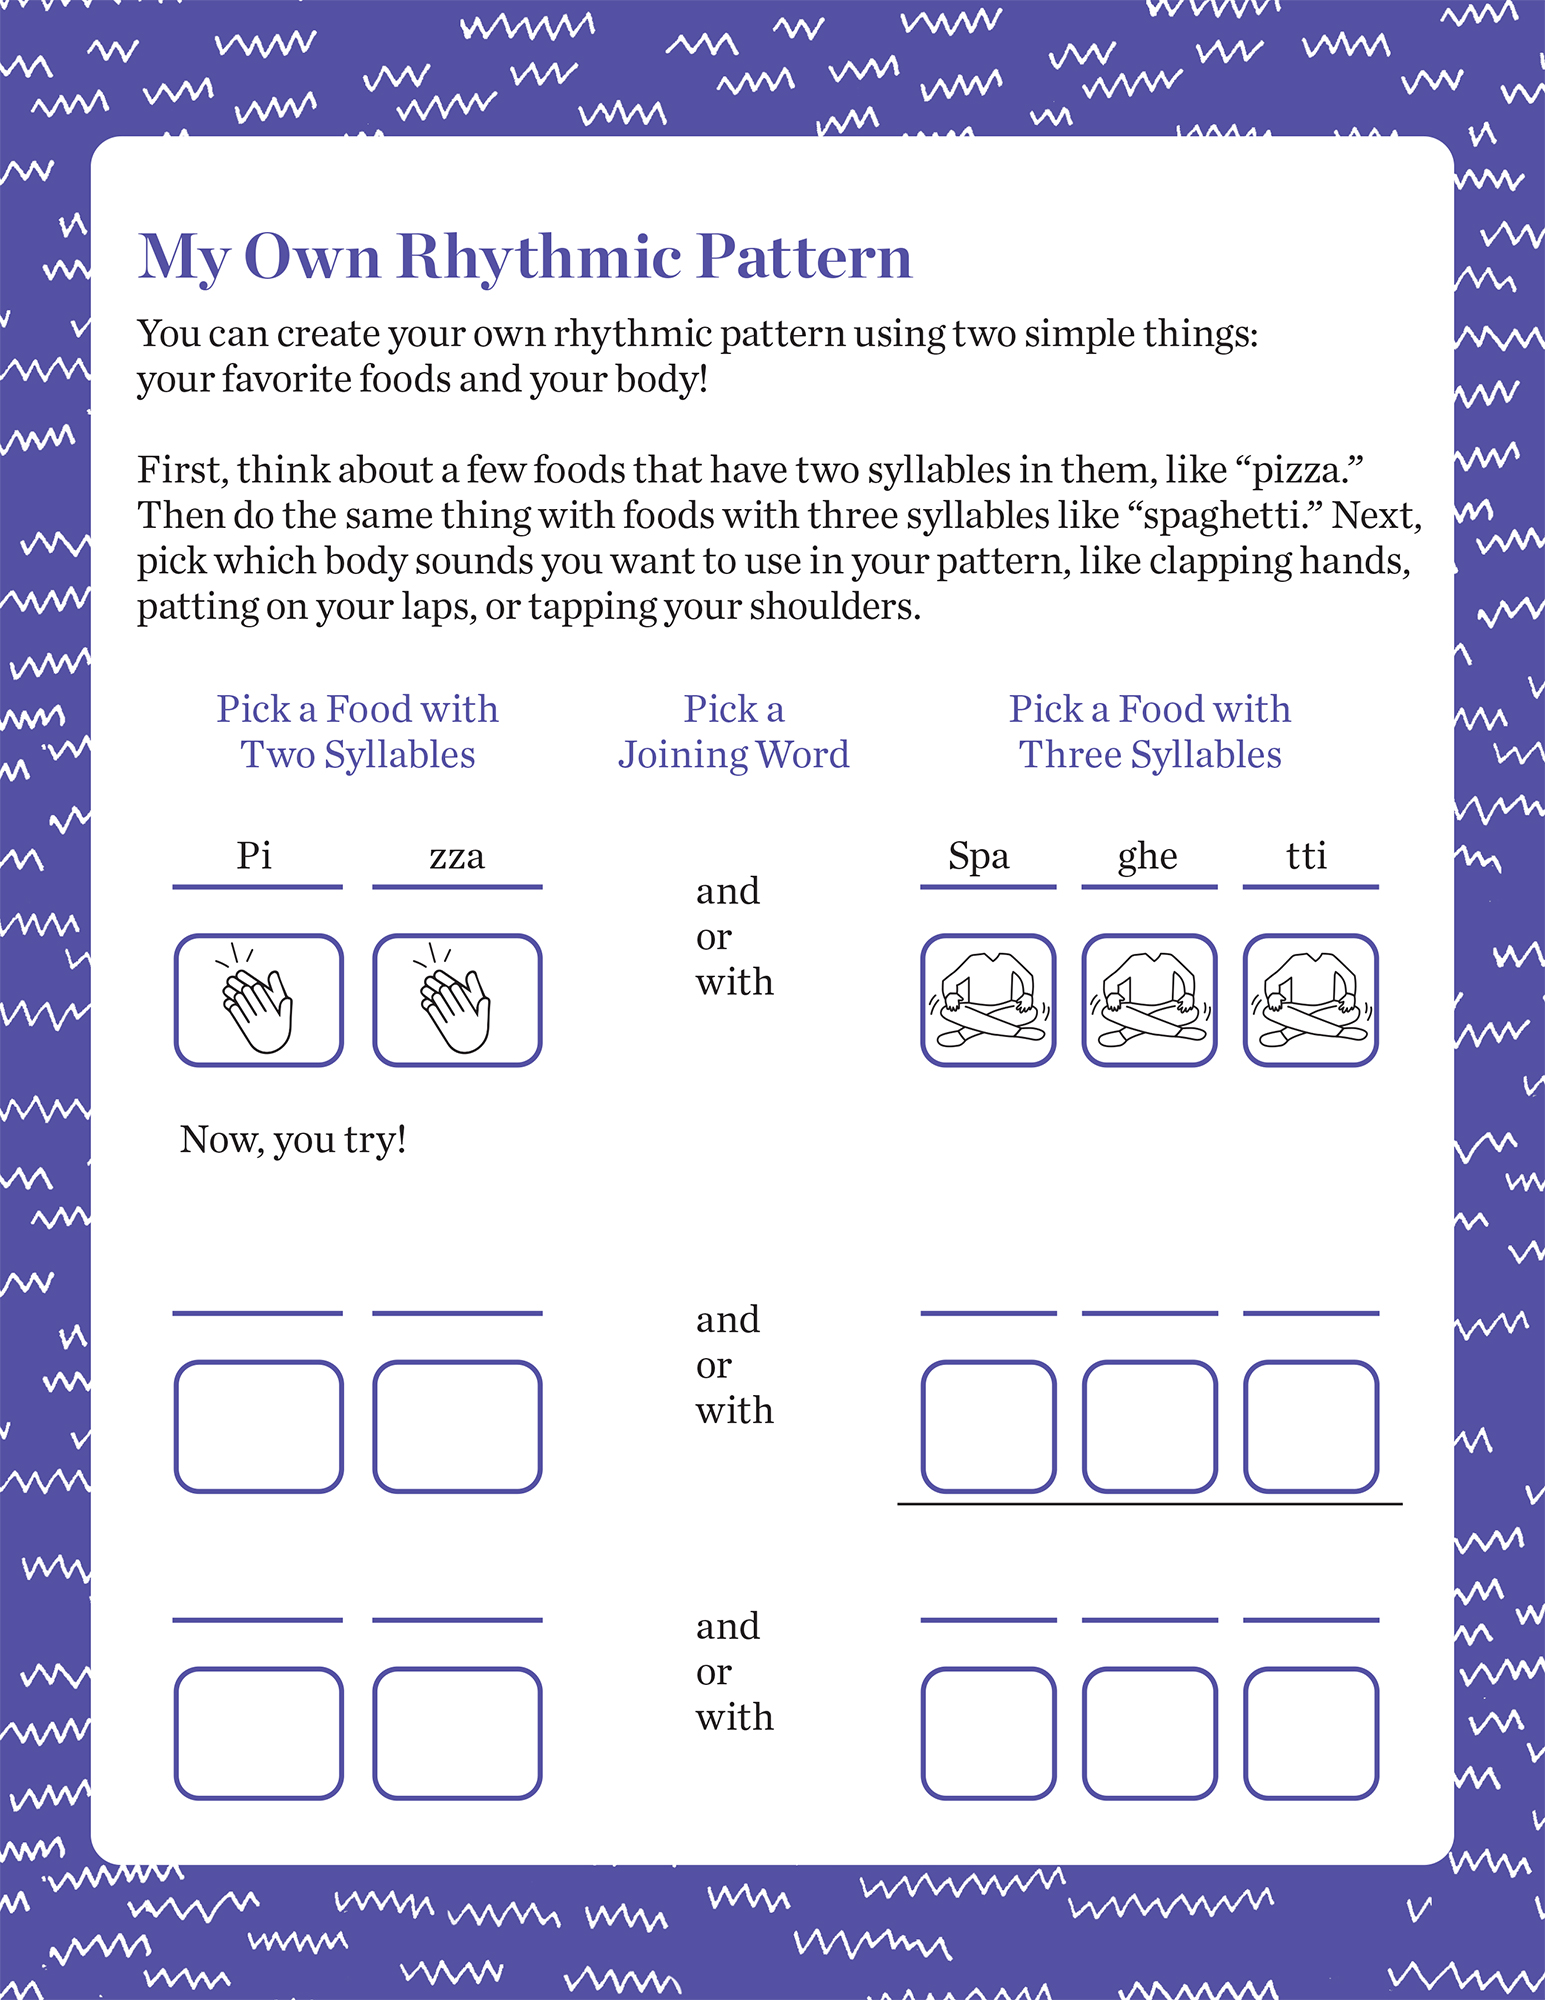 "My Own Rhythmic Pattern" student activity